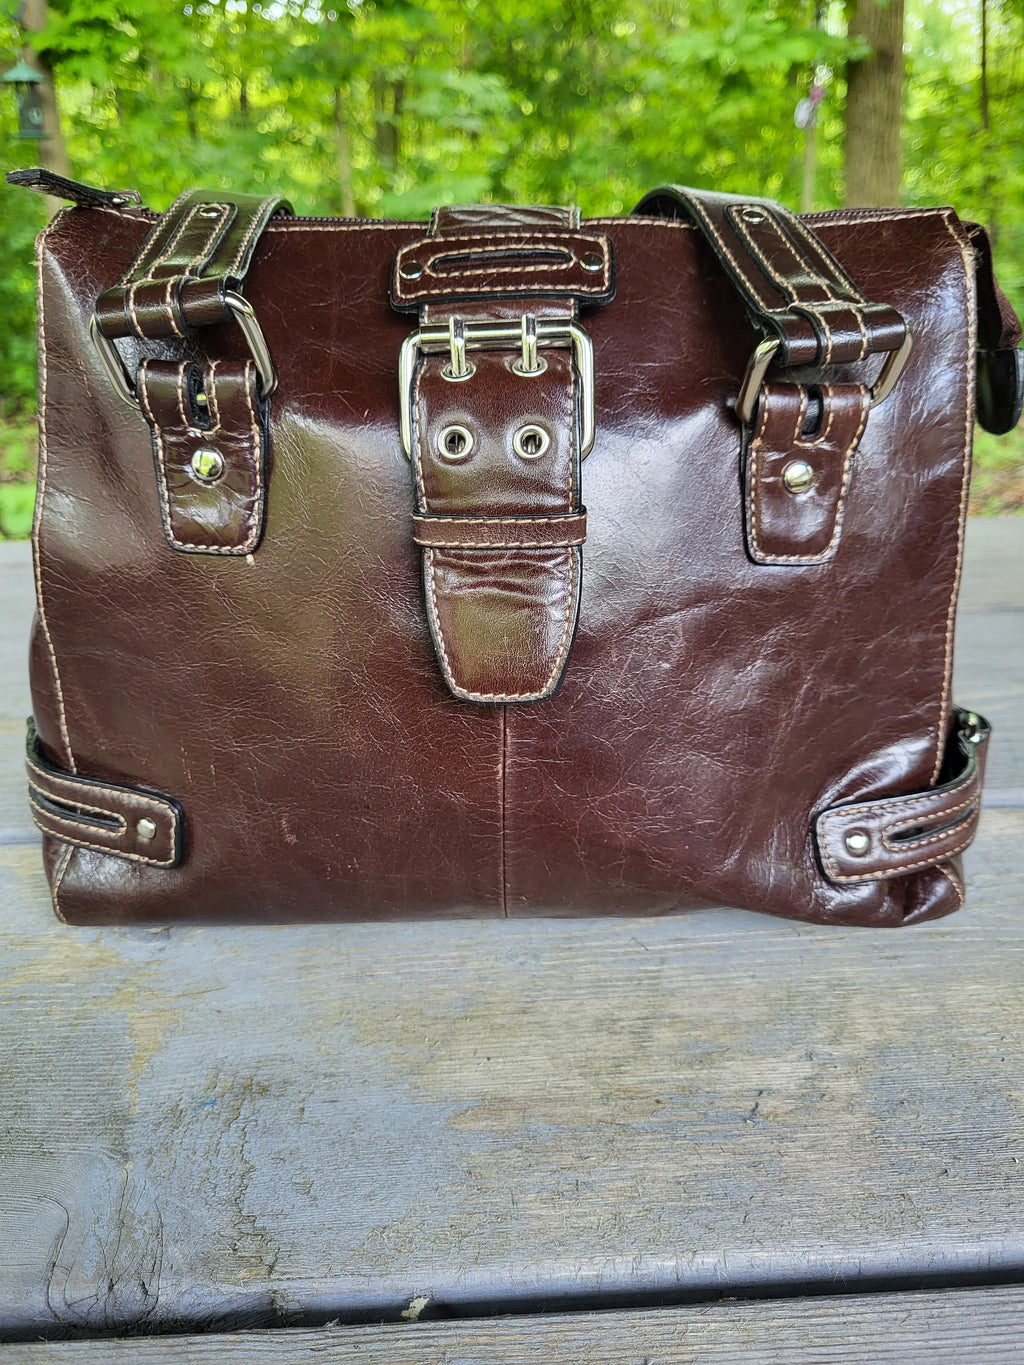 Distressed Brown Leather and Vinyl Shoulder Bag